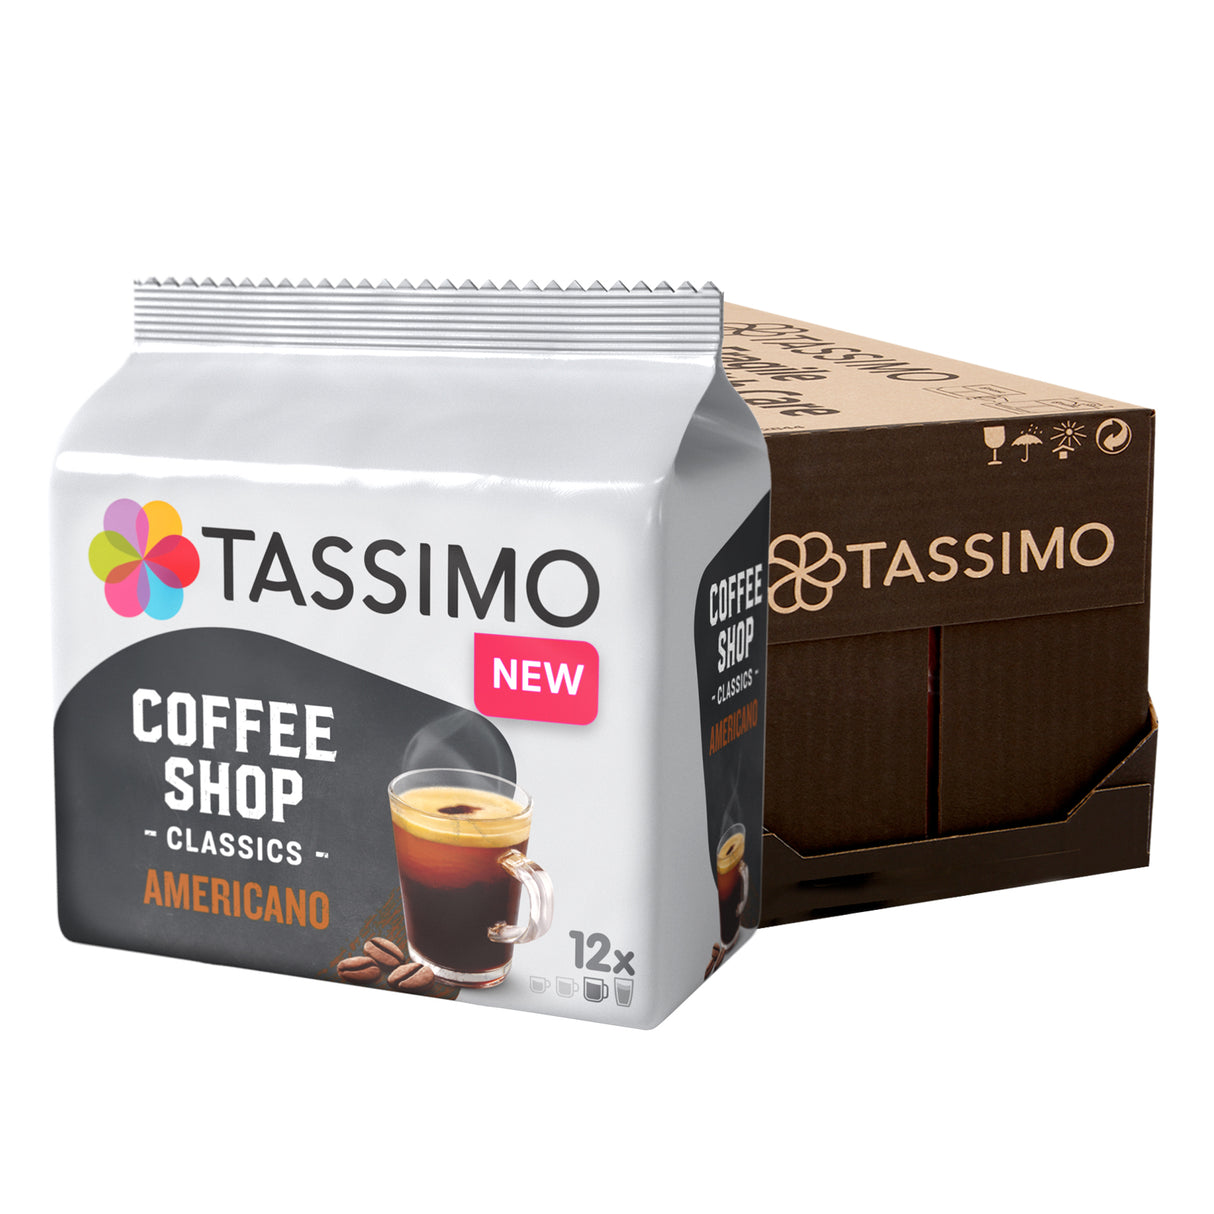 Tassimo Coffee Shop Classics Americano Coffee Pods Case pack